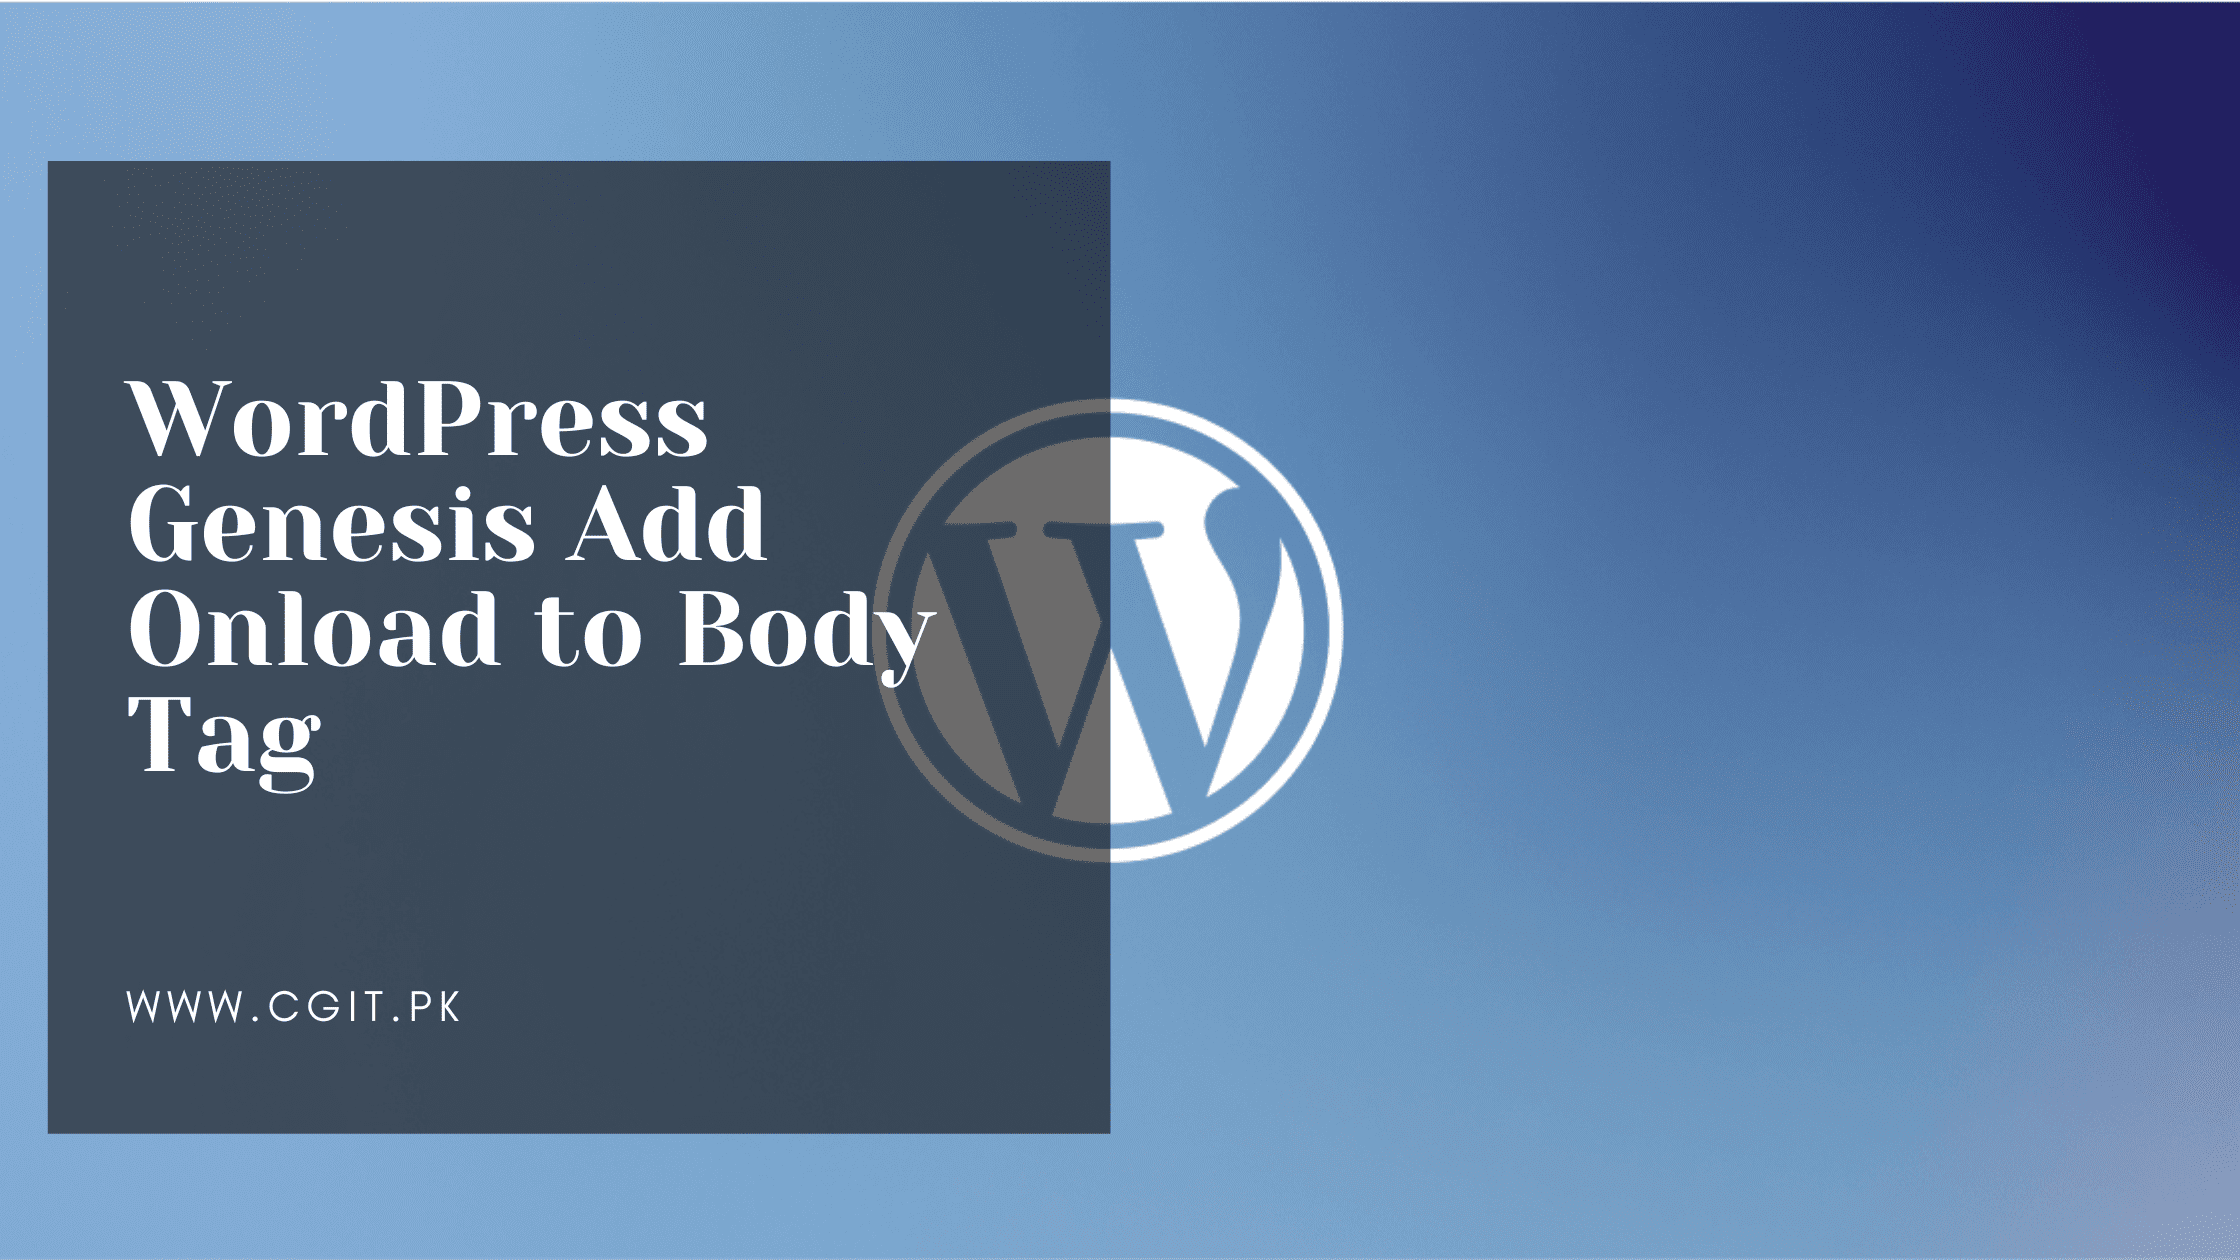 WordPress Genesis Add Onload to Body Tag